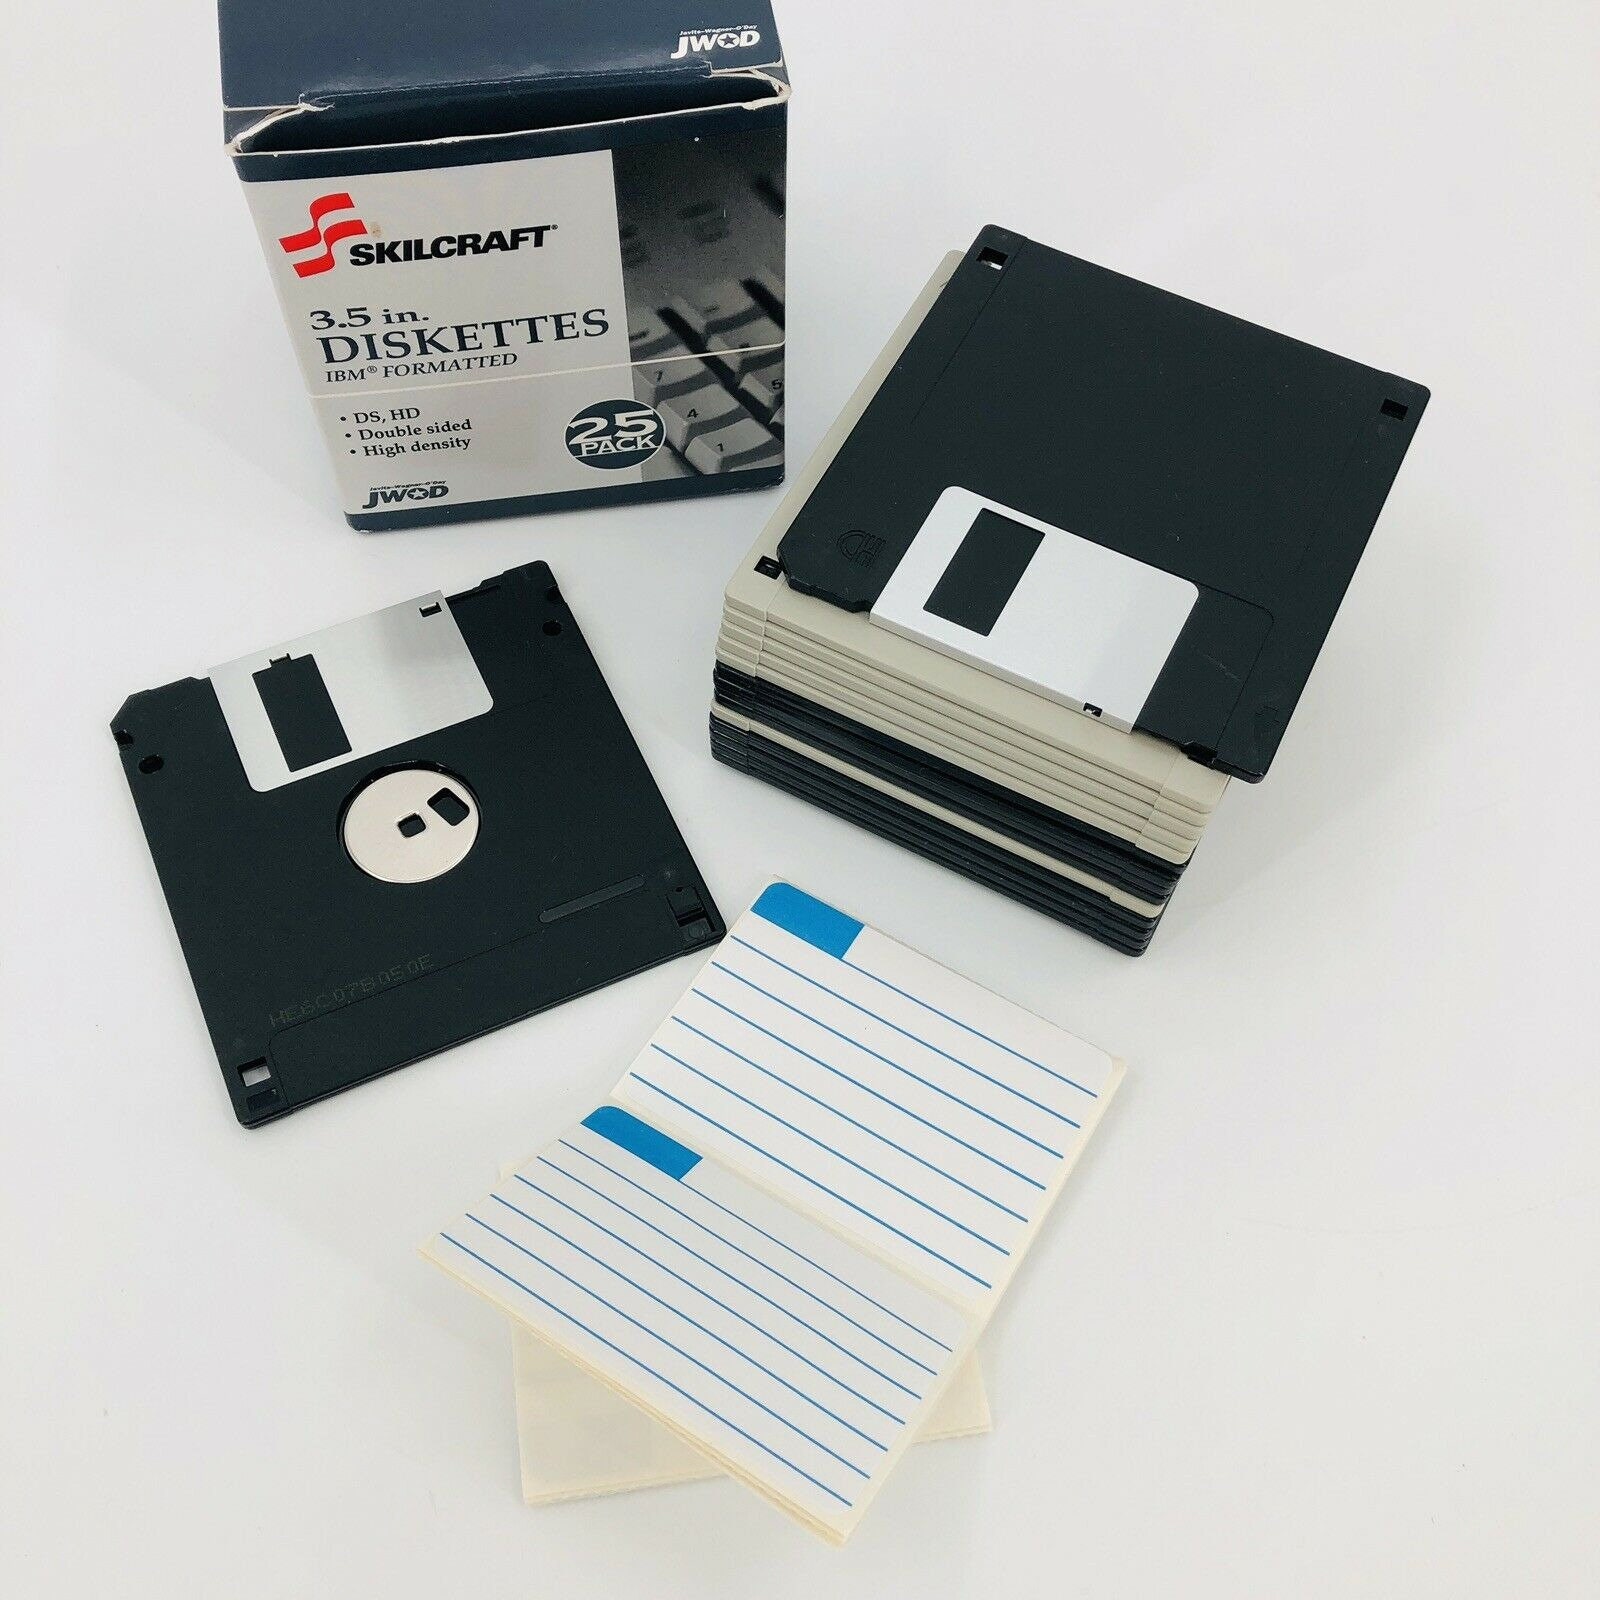 10 Pack Skilcraft 3.5 in Diskettes IBM Formatted 